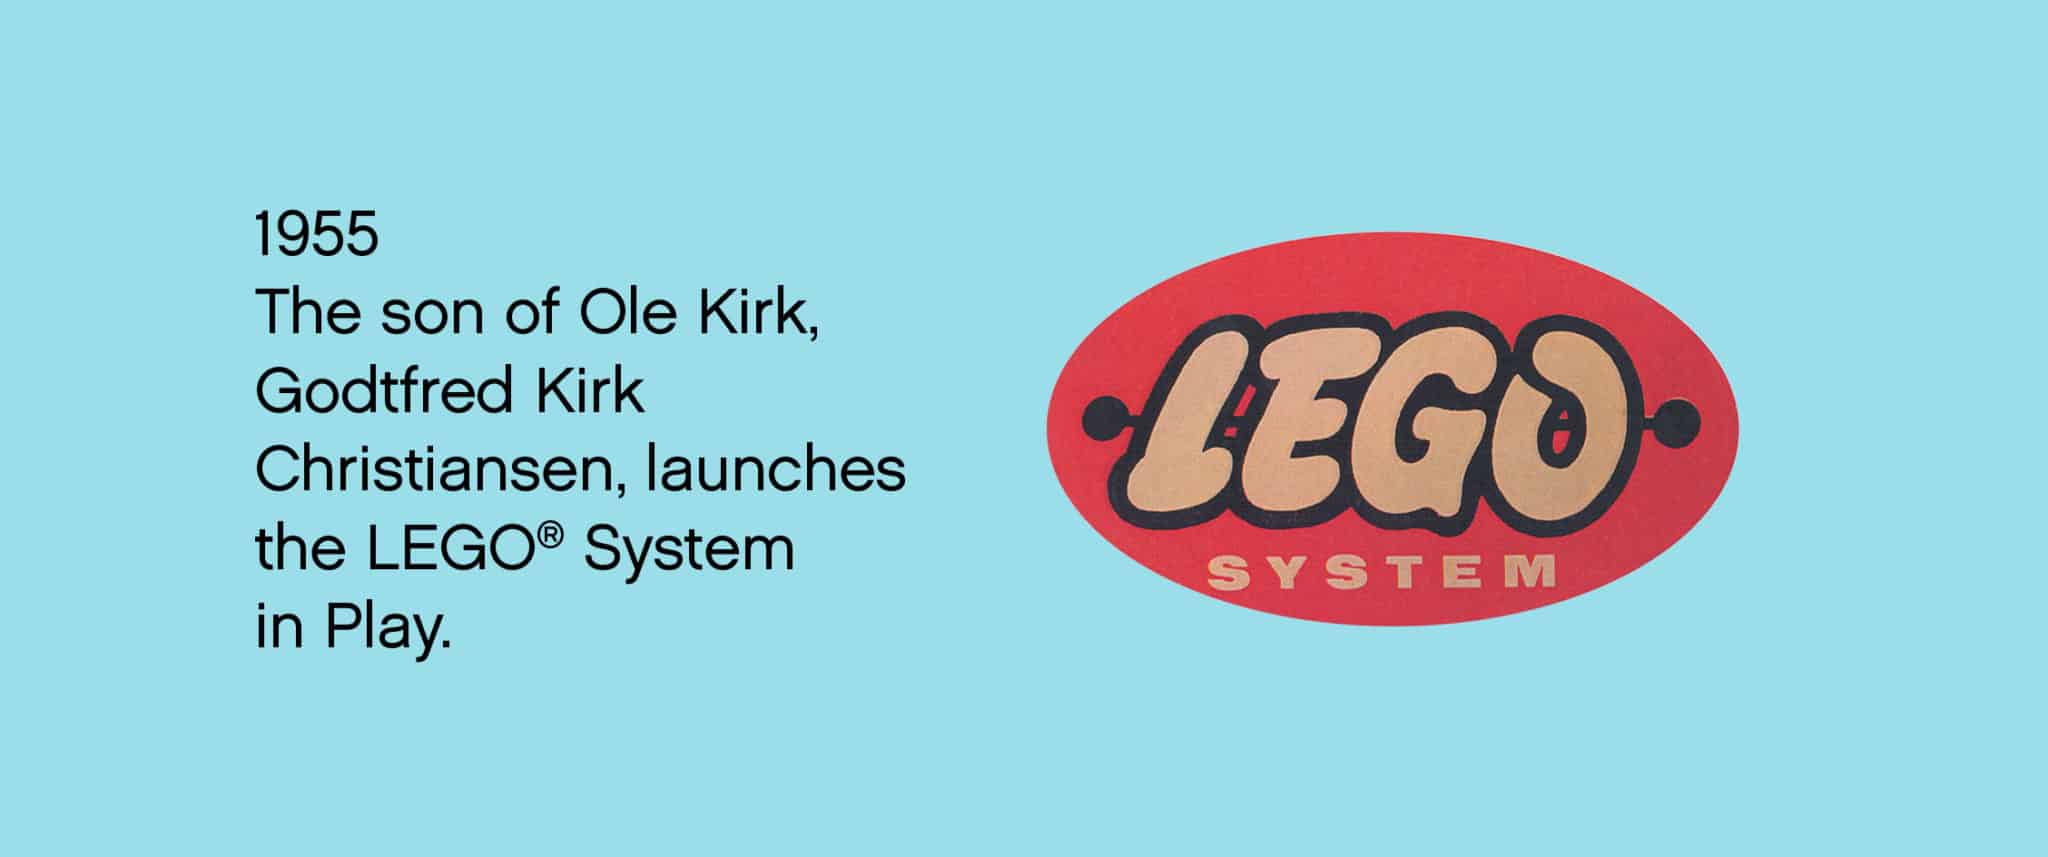 lego system logo